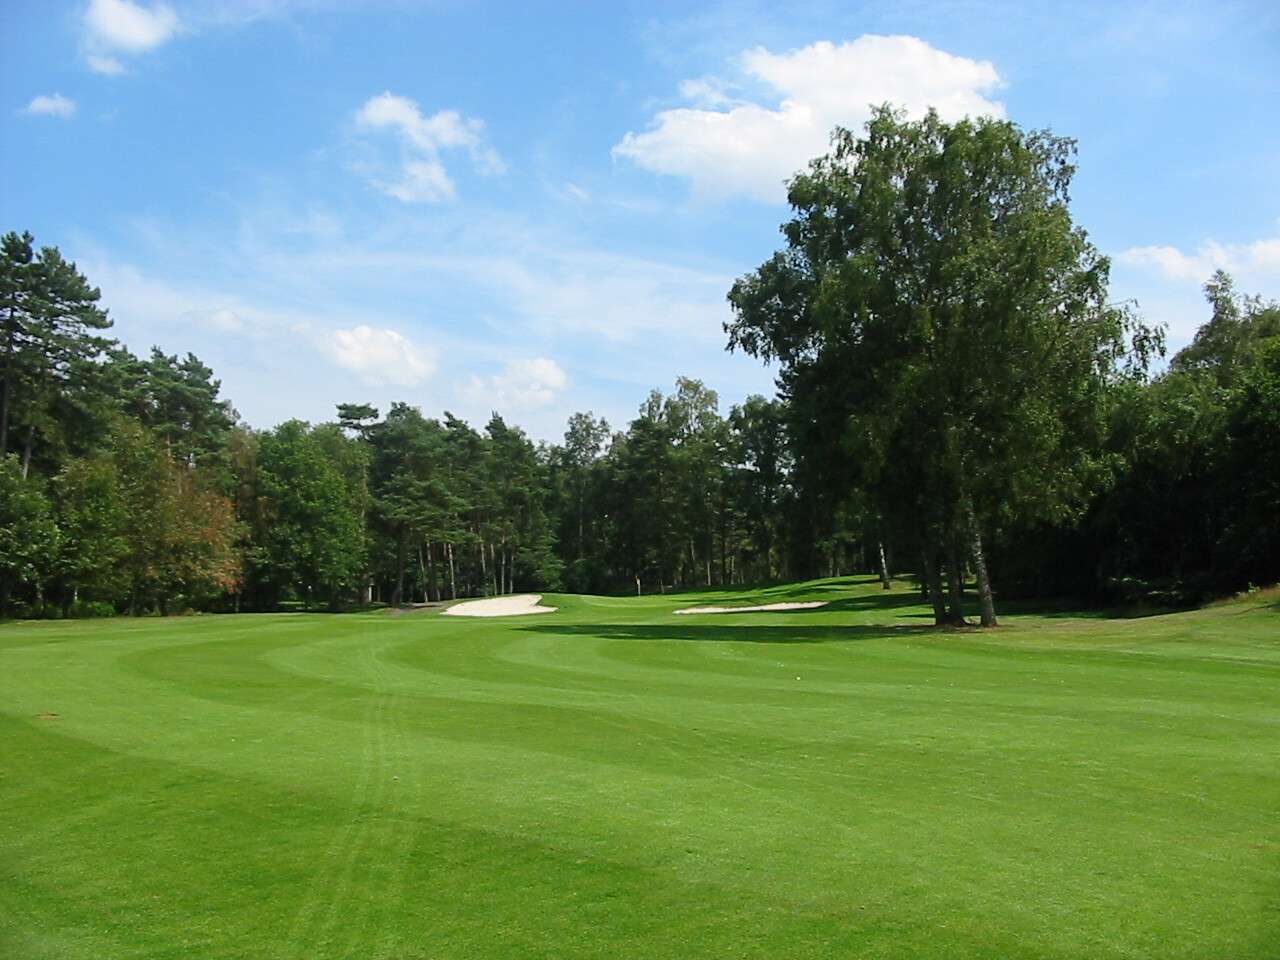 The Buckinghamshire Golf Club